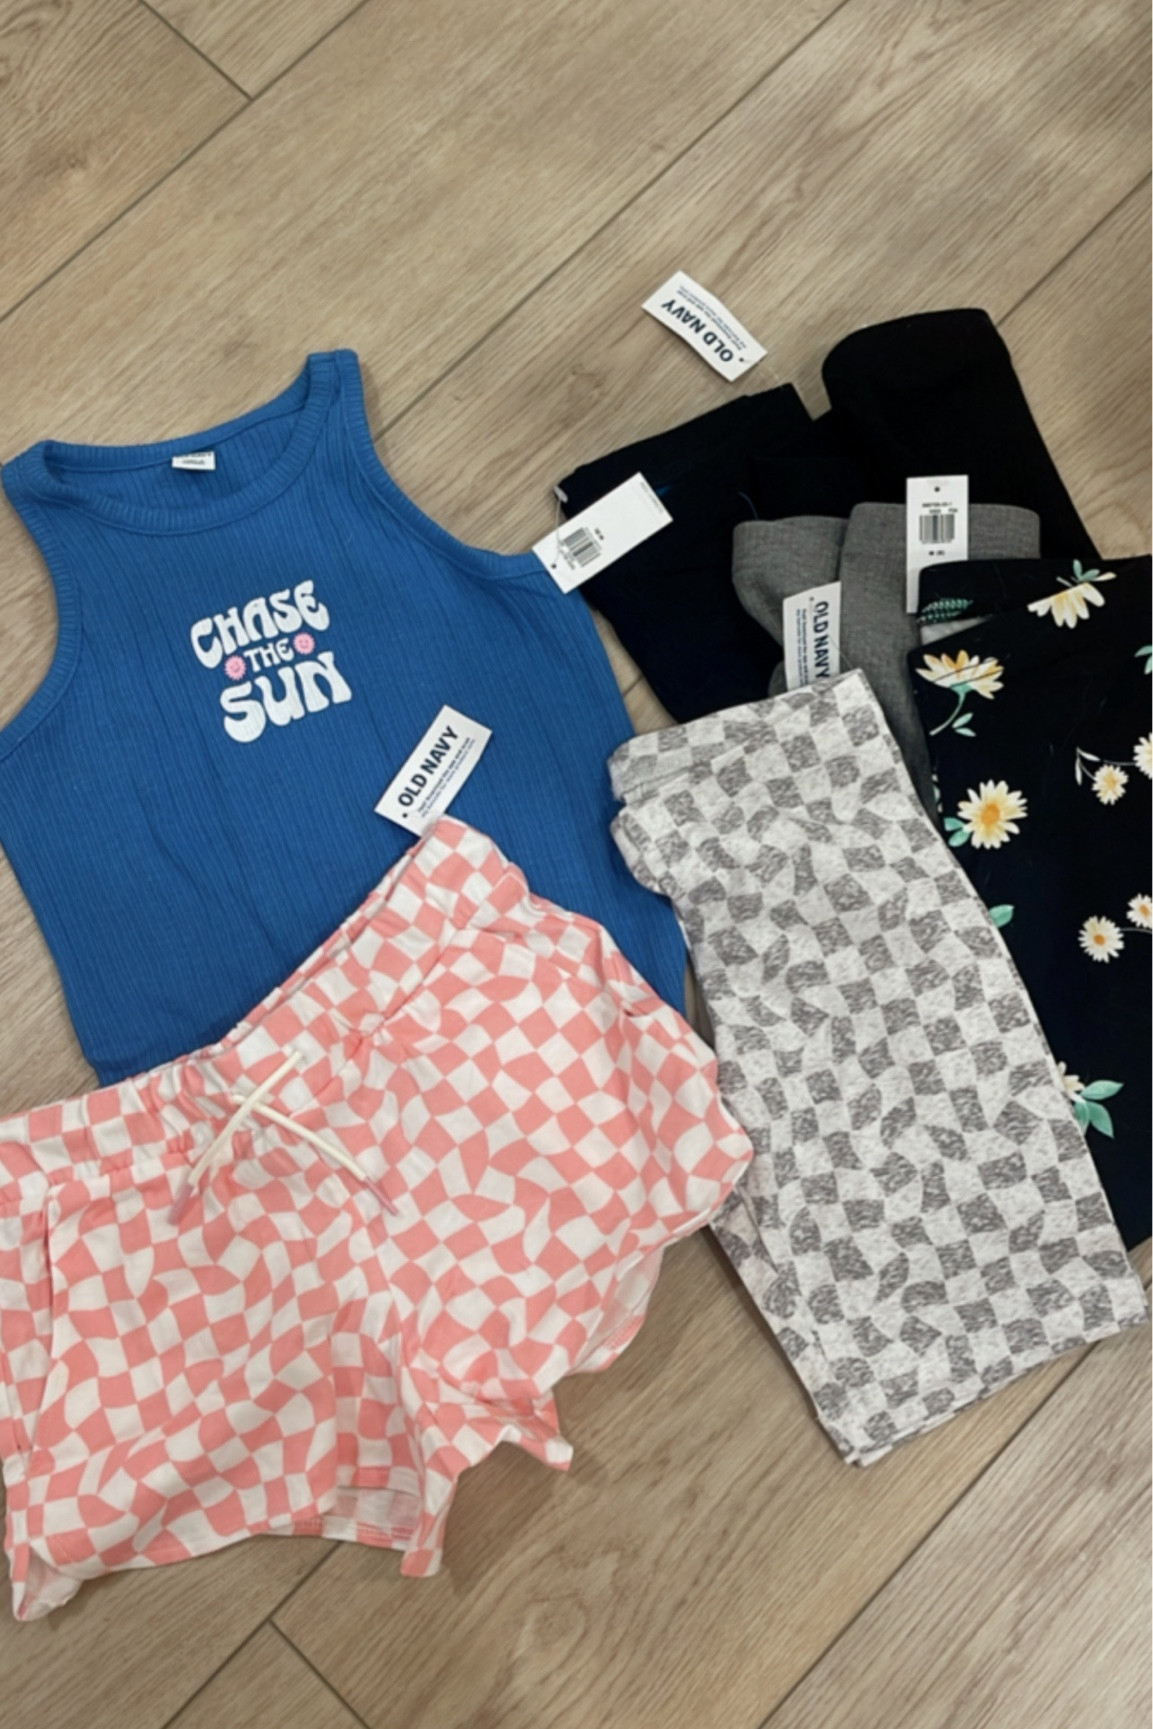 Printed Dolphin-Hem Cheer Shorts for Girls